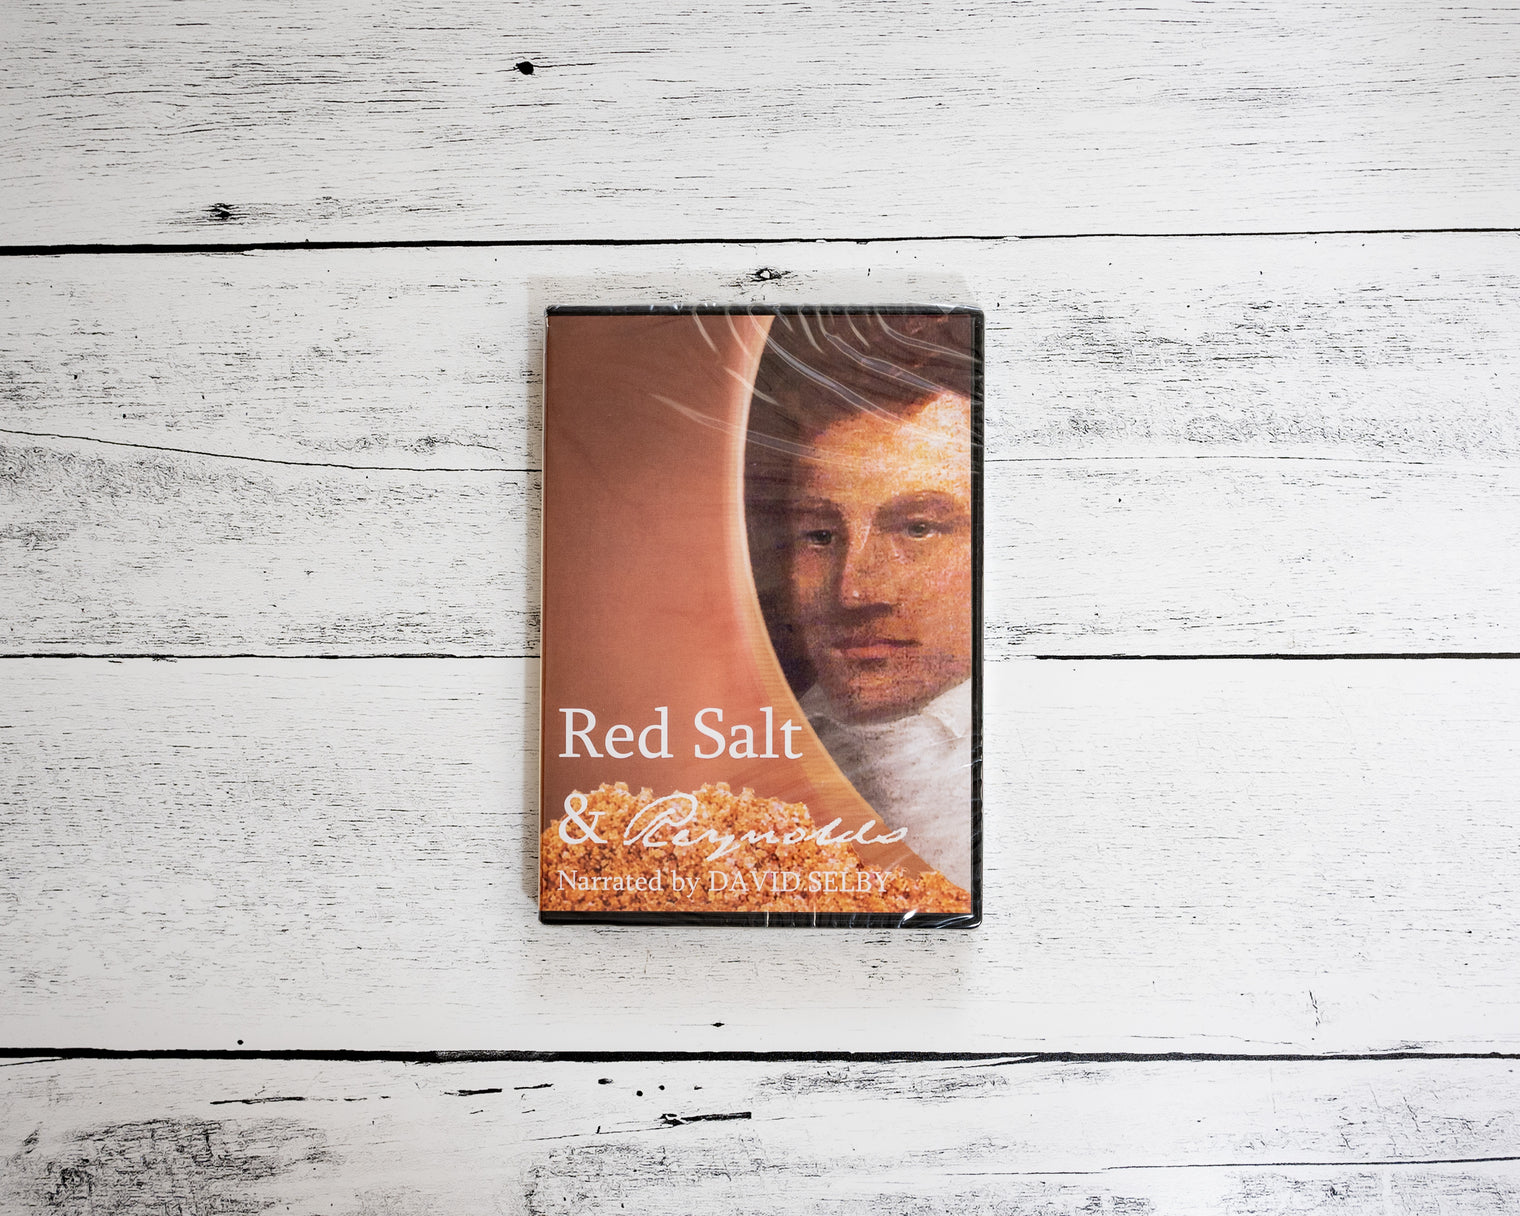 Red Salt & Reynolds DVD